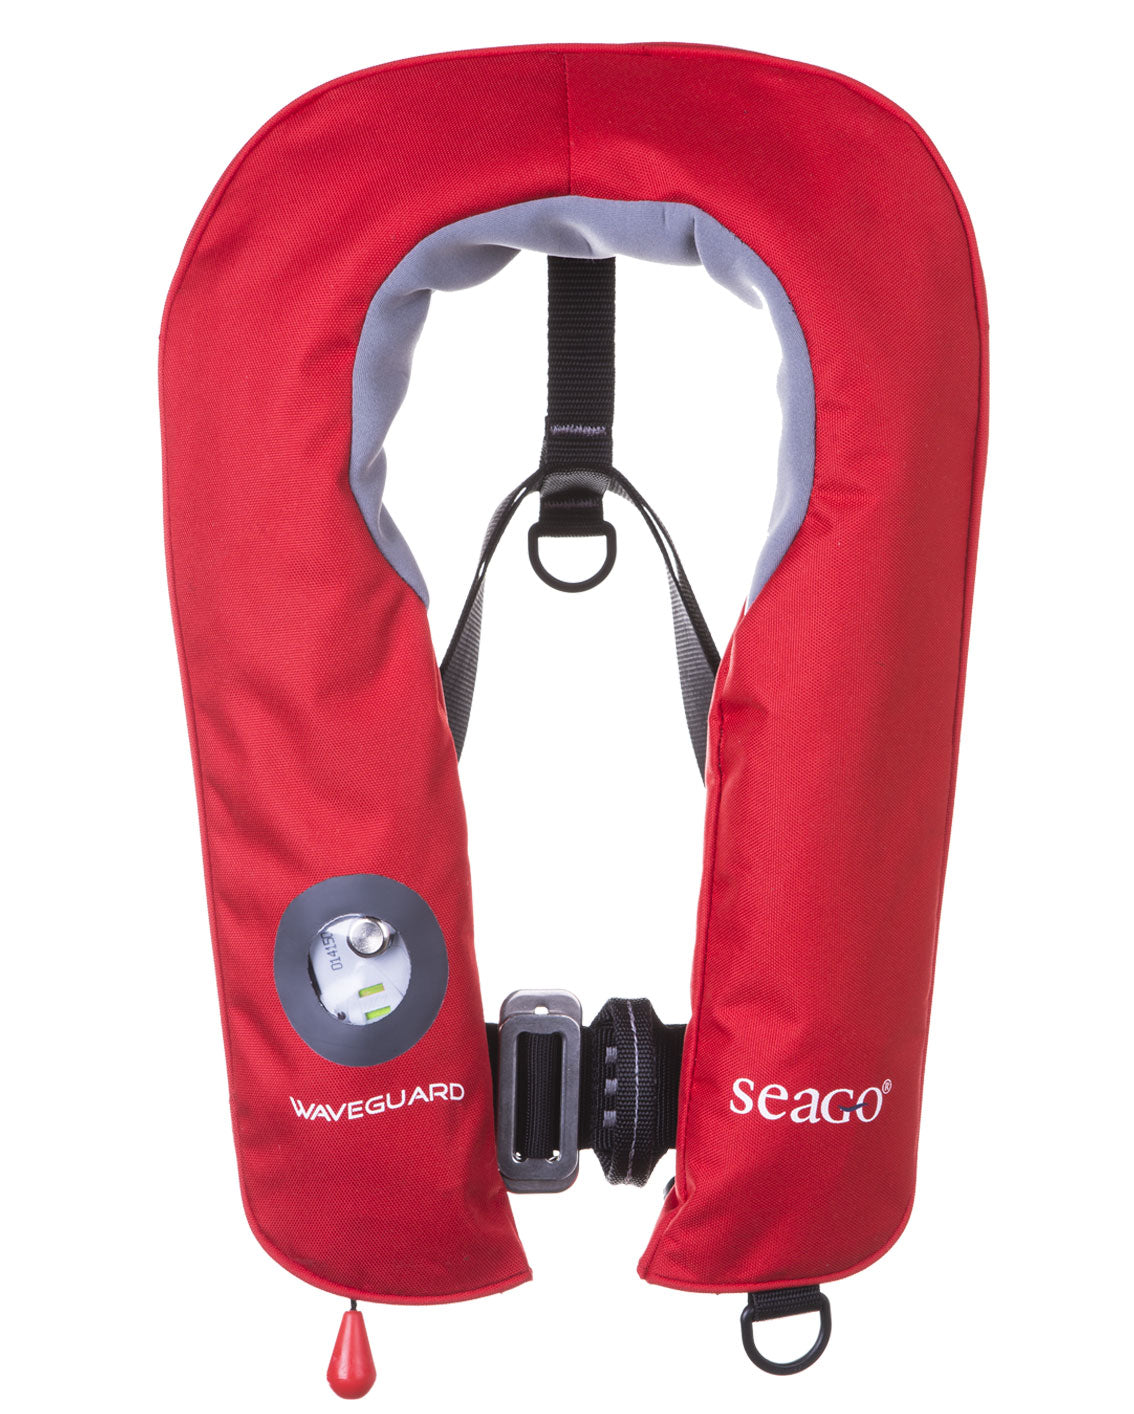 Seago Waveguard Junior-150 Life Jacket